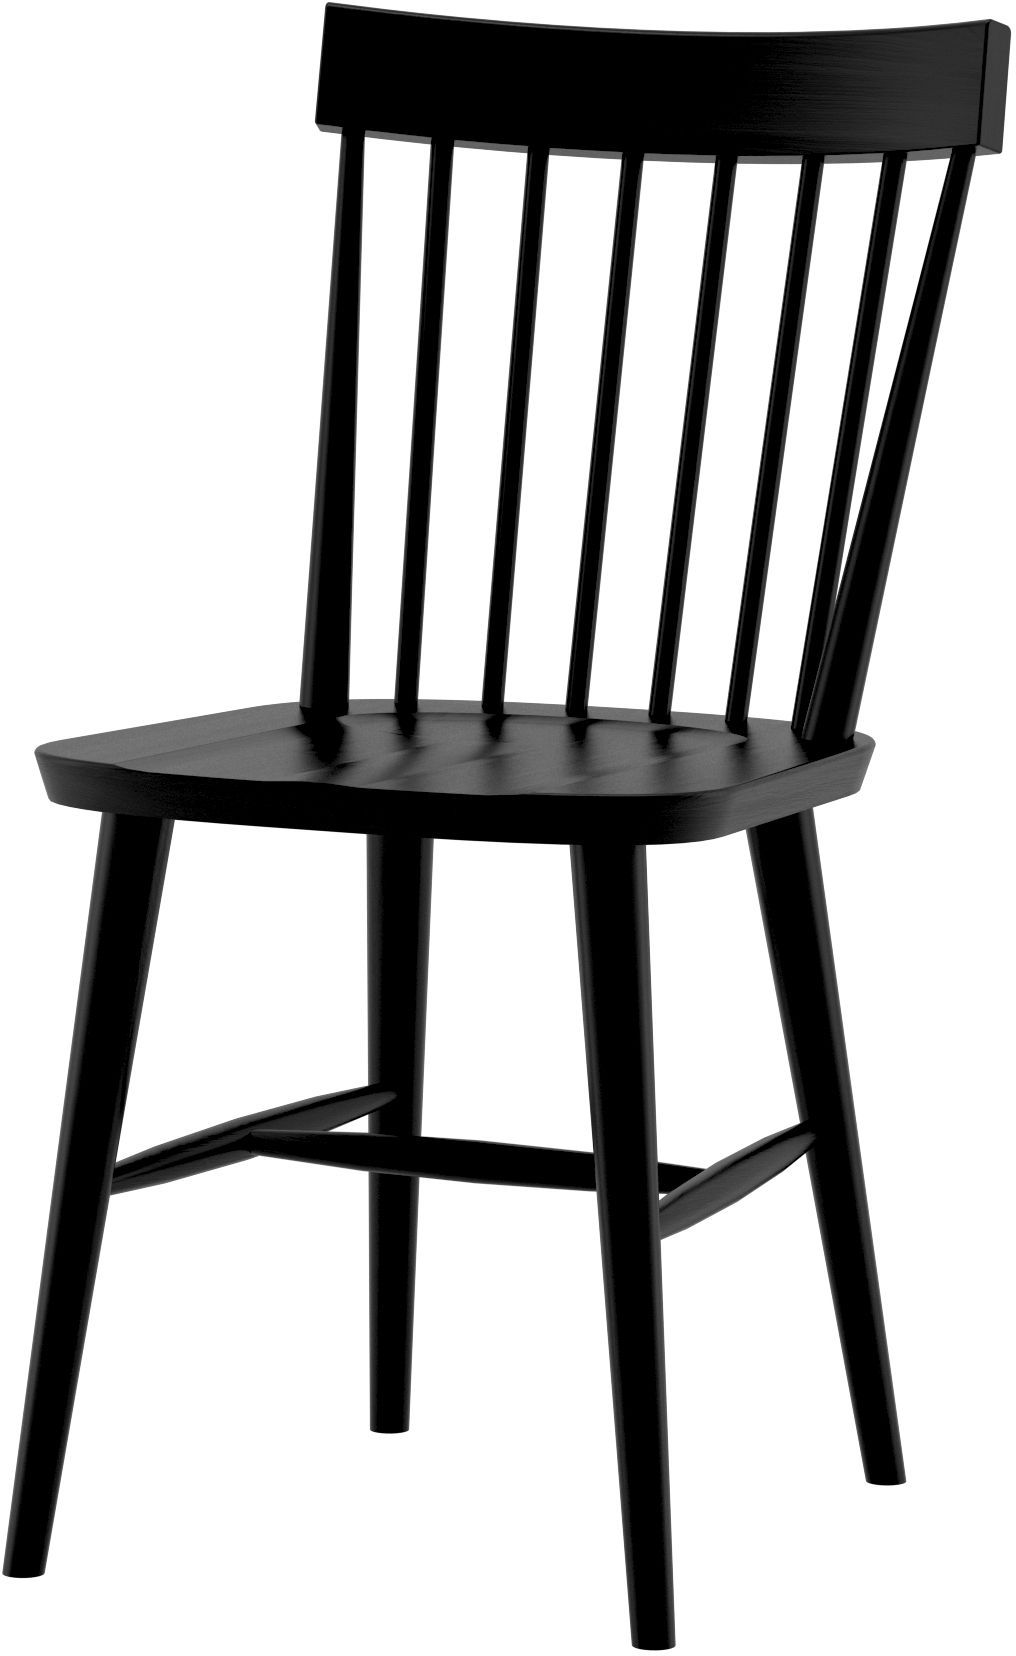 Bell & Stocchero Como Black Dining Chair